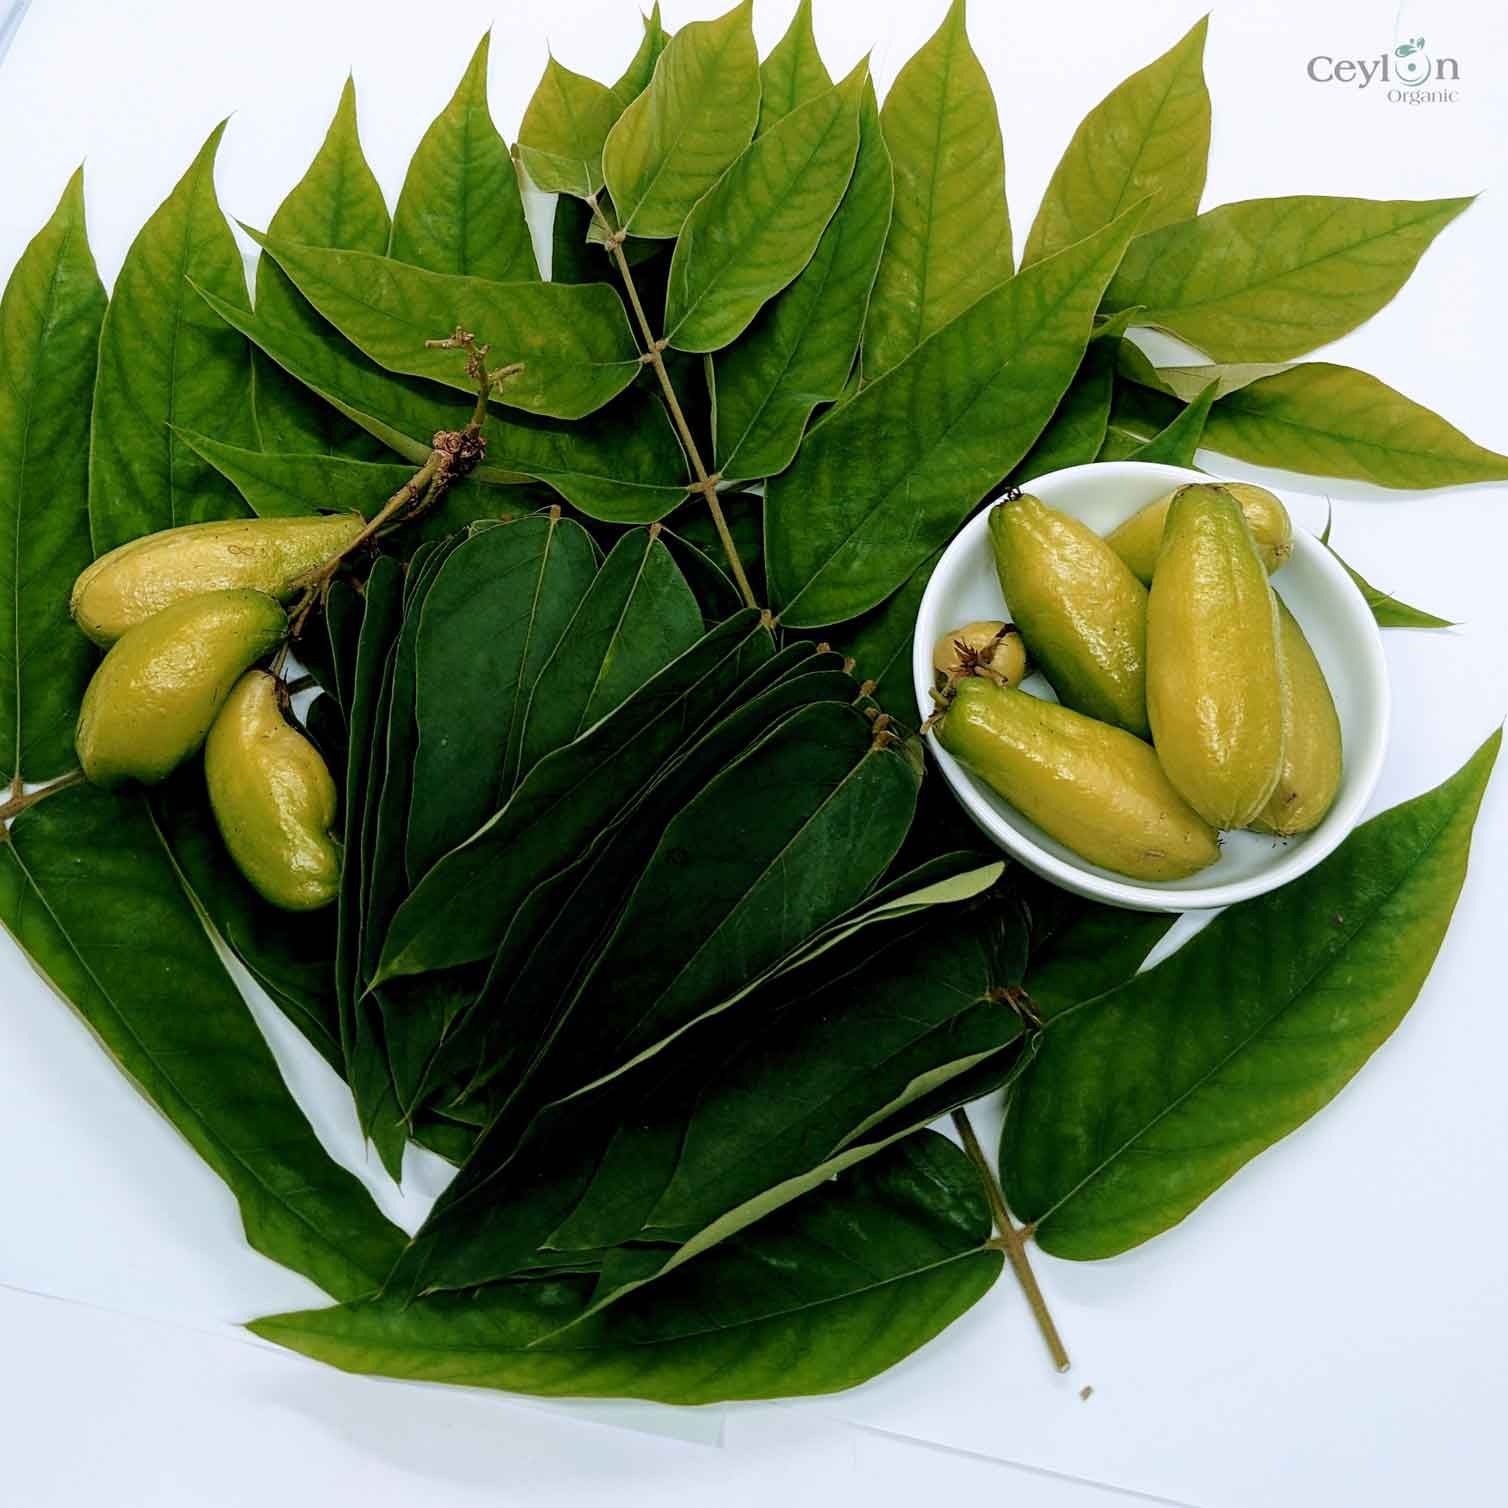 500+ Dried  Averrhoa Bilimbi Leaves, kamias leaves | ceylon organic-4